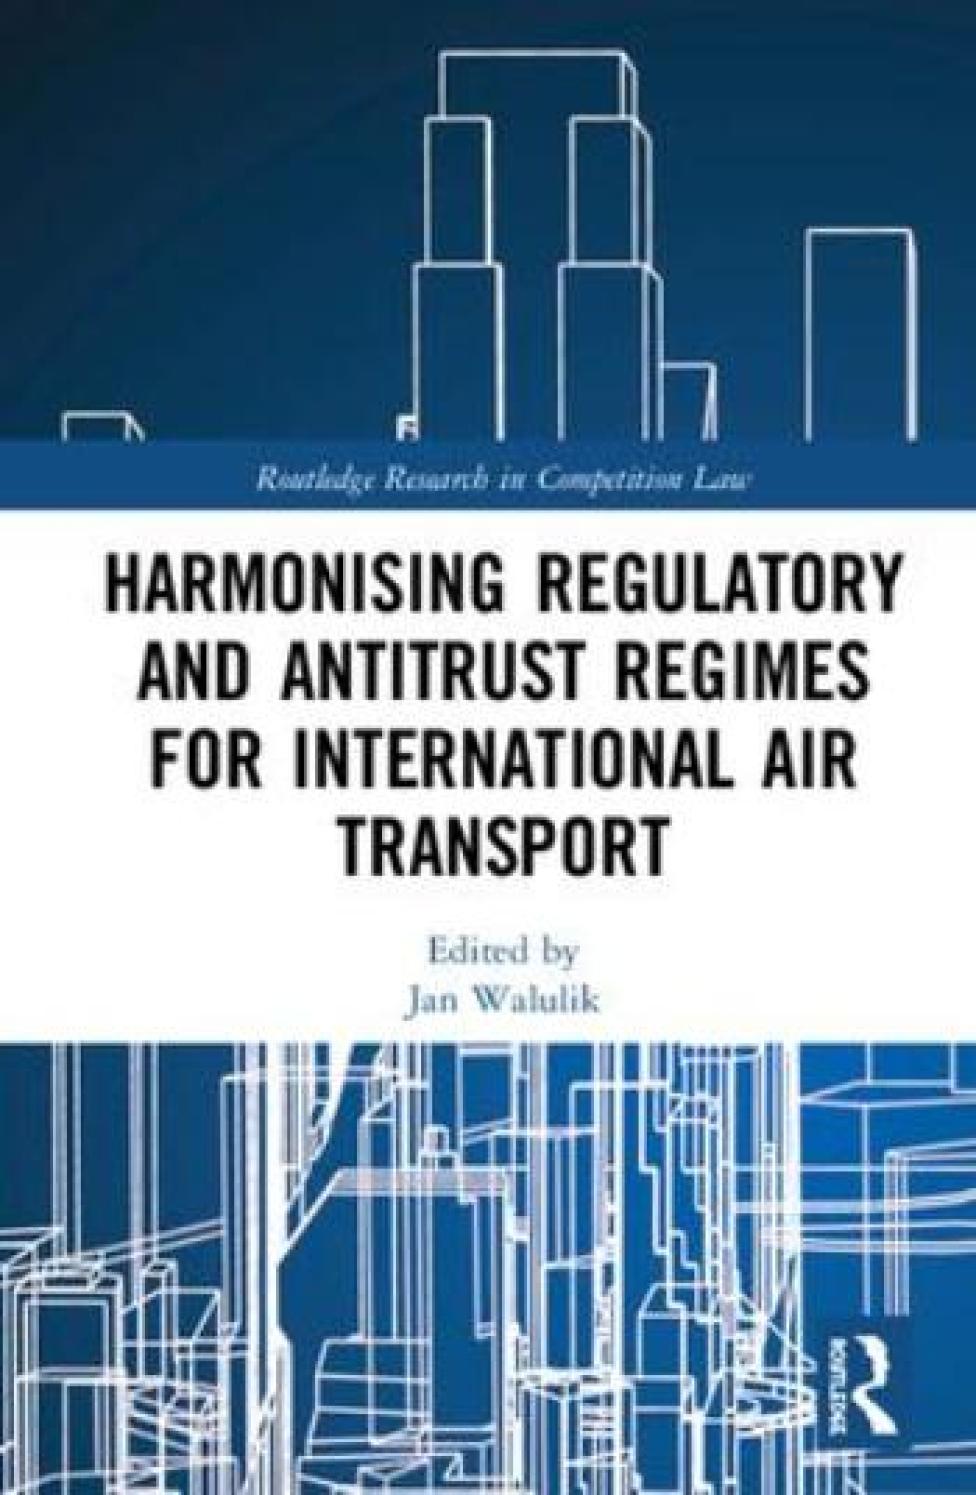 Książka "Harmonising Regulatory and Antitrust Regimes for International Air Transport" (fot. routledge.com)